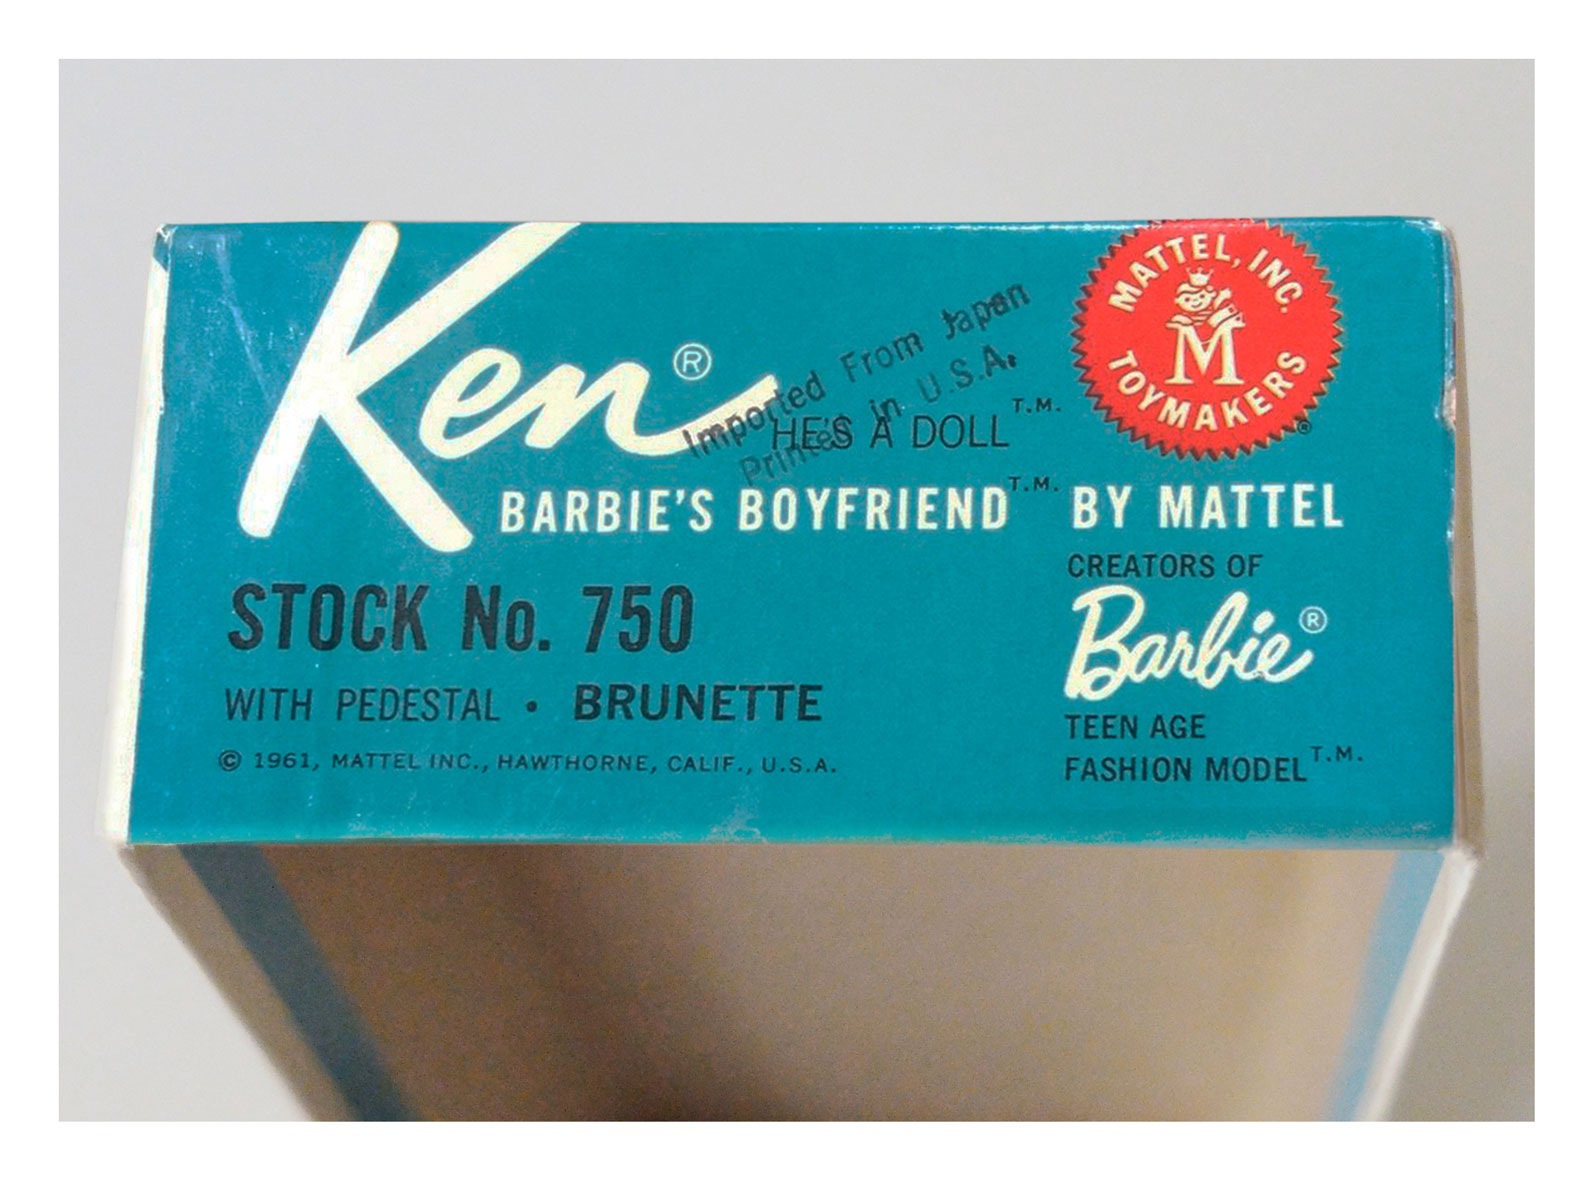 1963-67 #0750 USA 'shorty' Ken box containing Japan-made Ken